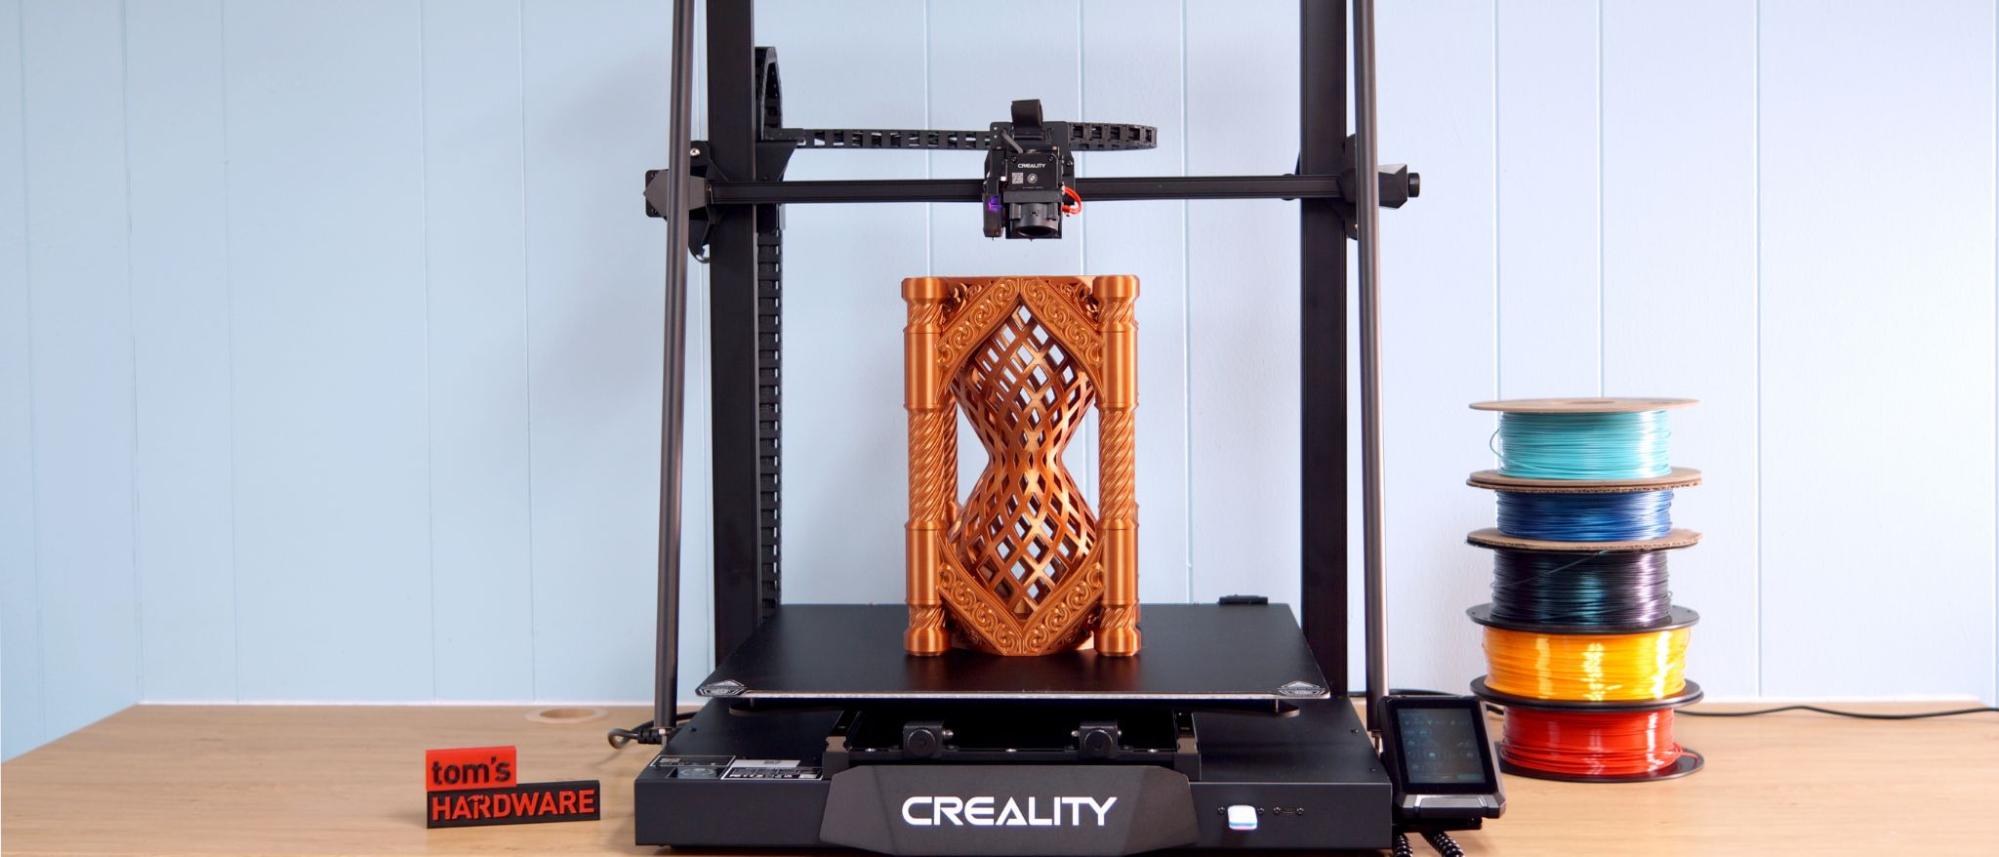  Creality 3D Printers CR-M4 Largest FDM 3D Printer 25